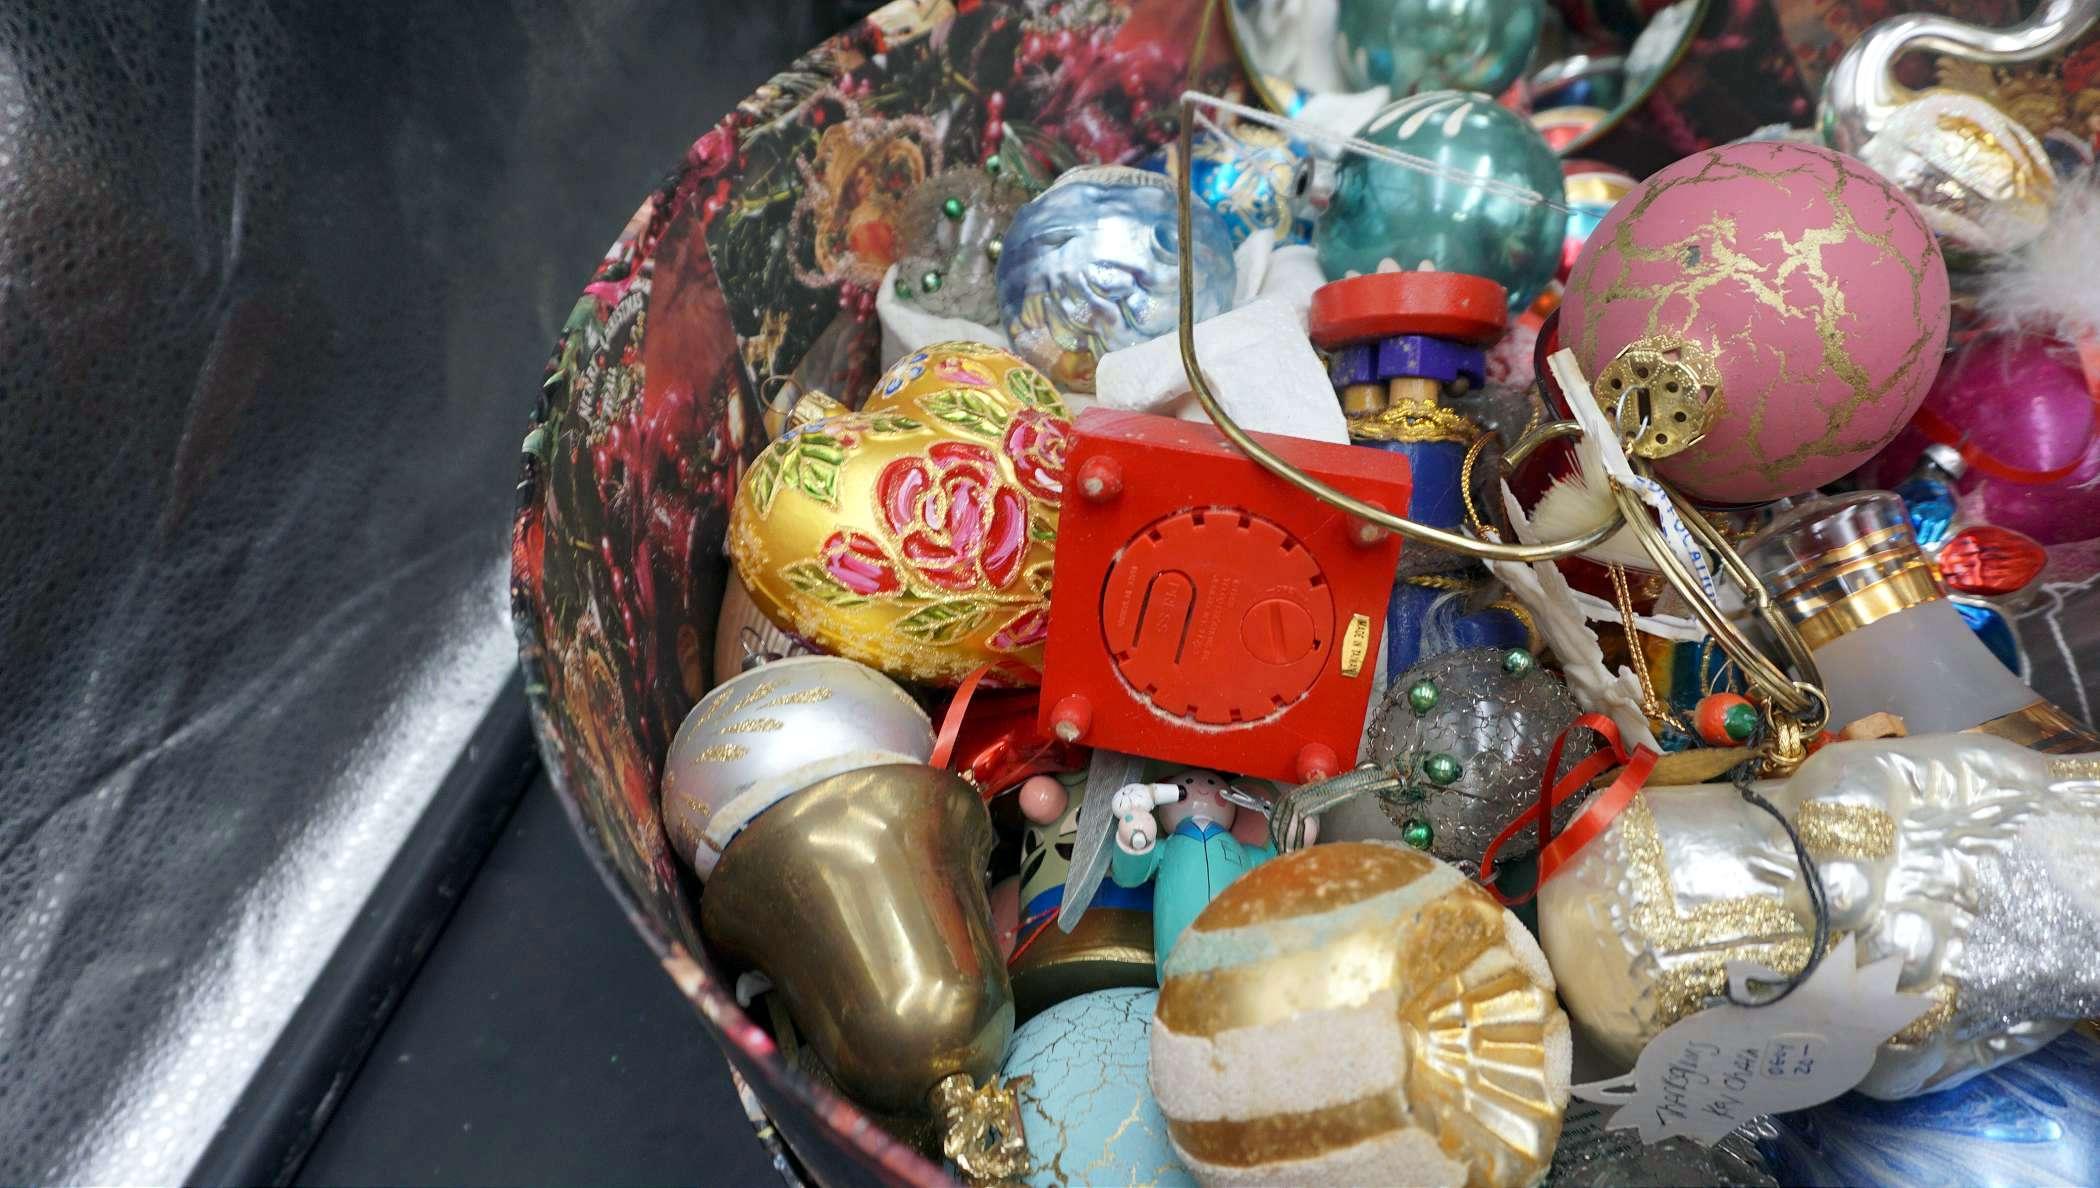 Hat Box W/ Assorted Christmas Tree Ornaments & Angel